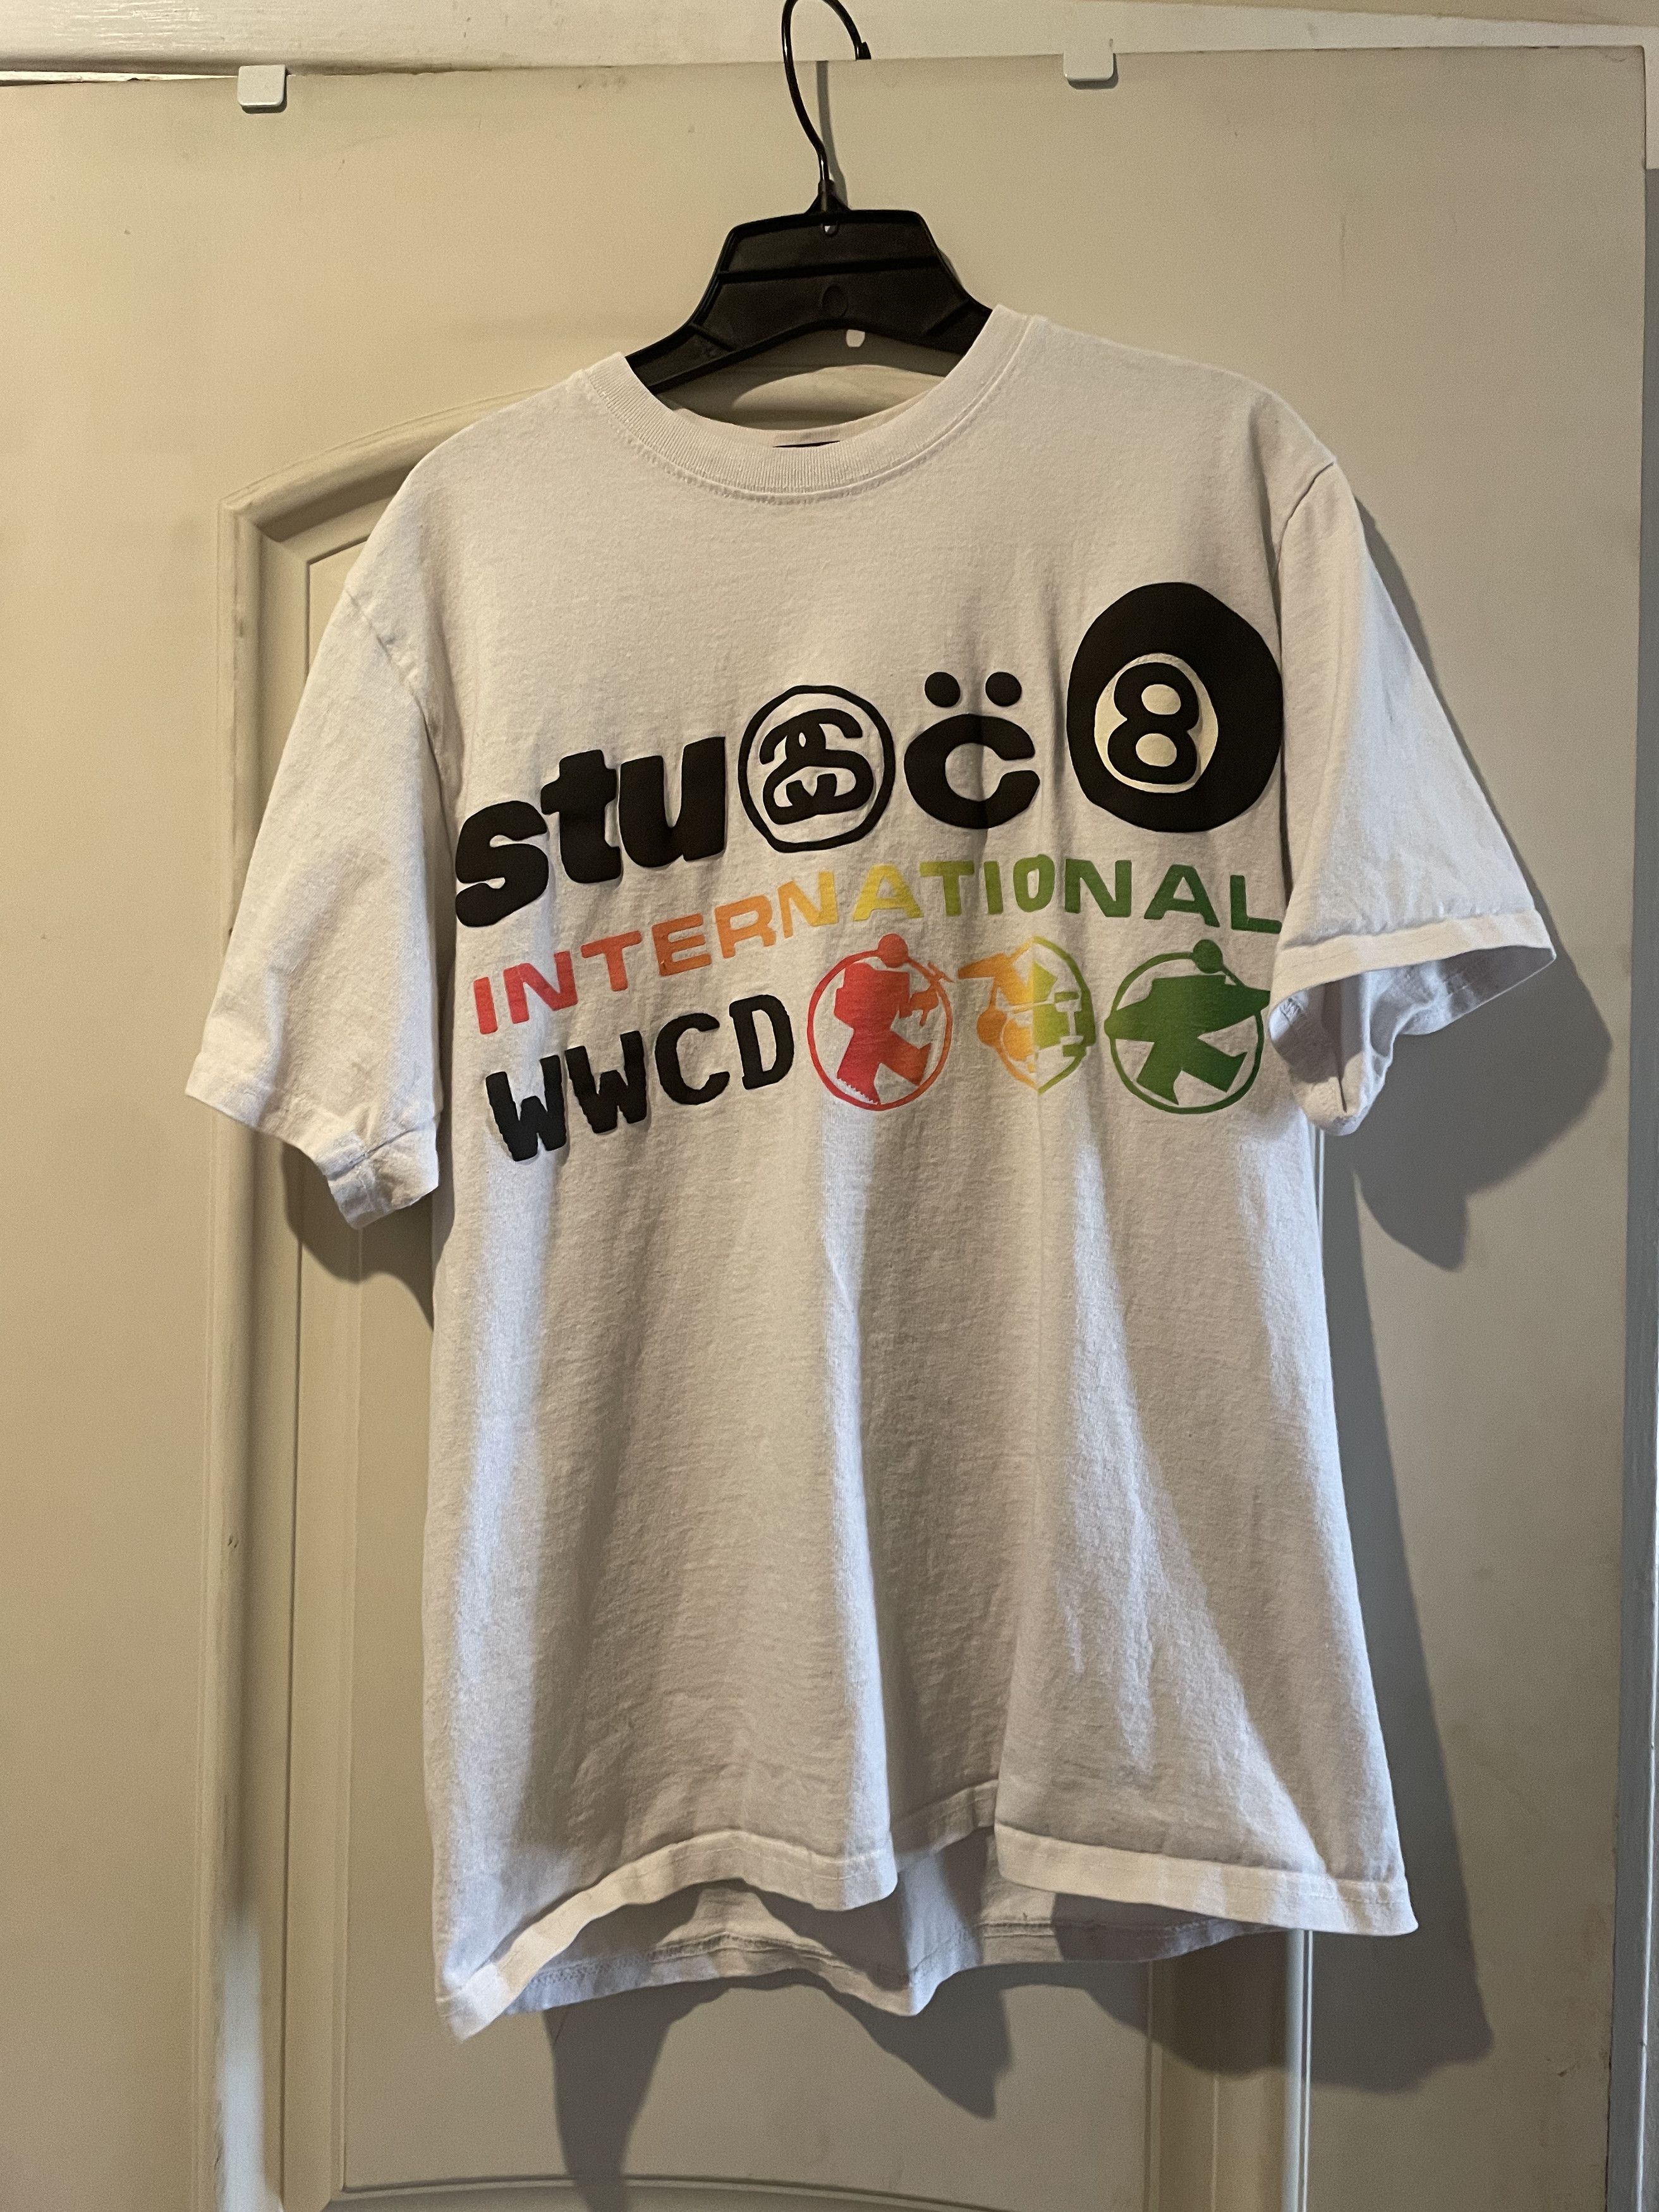 Stussy Stussy x CPFM International WWCD T Shirt | Grailed